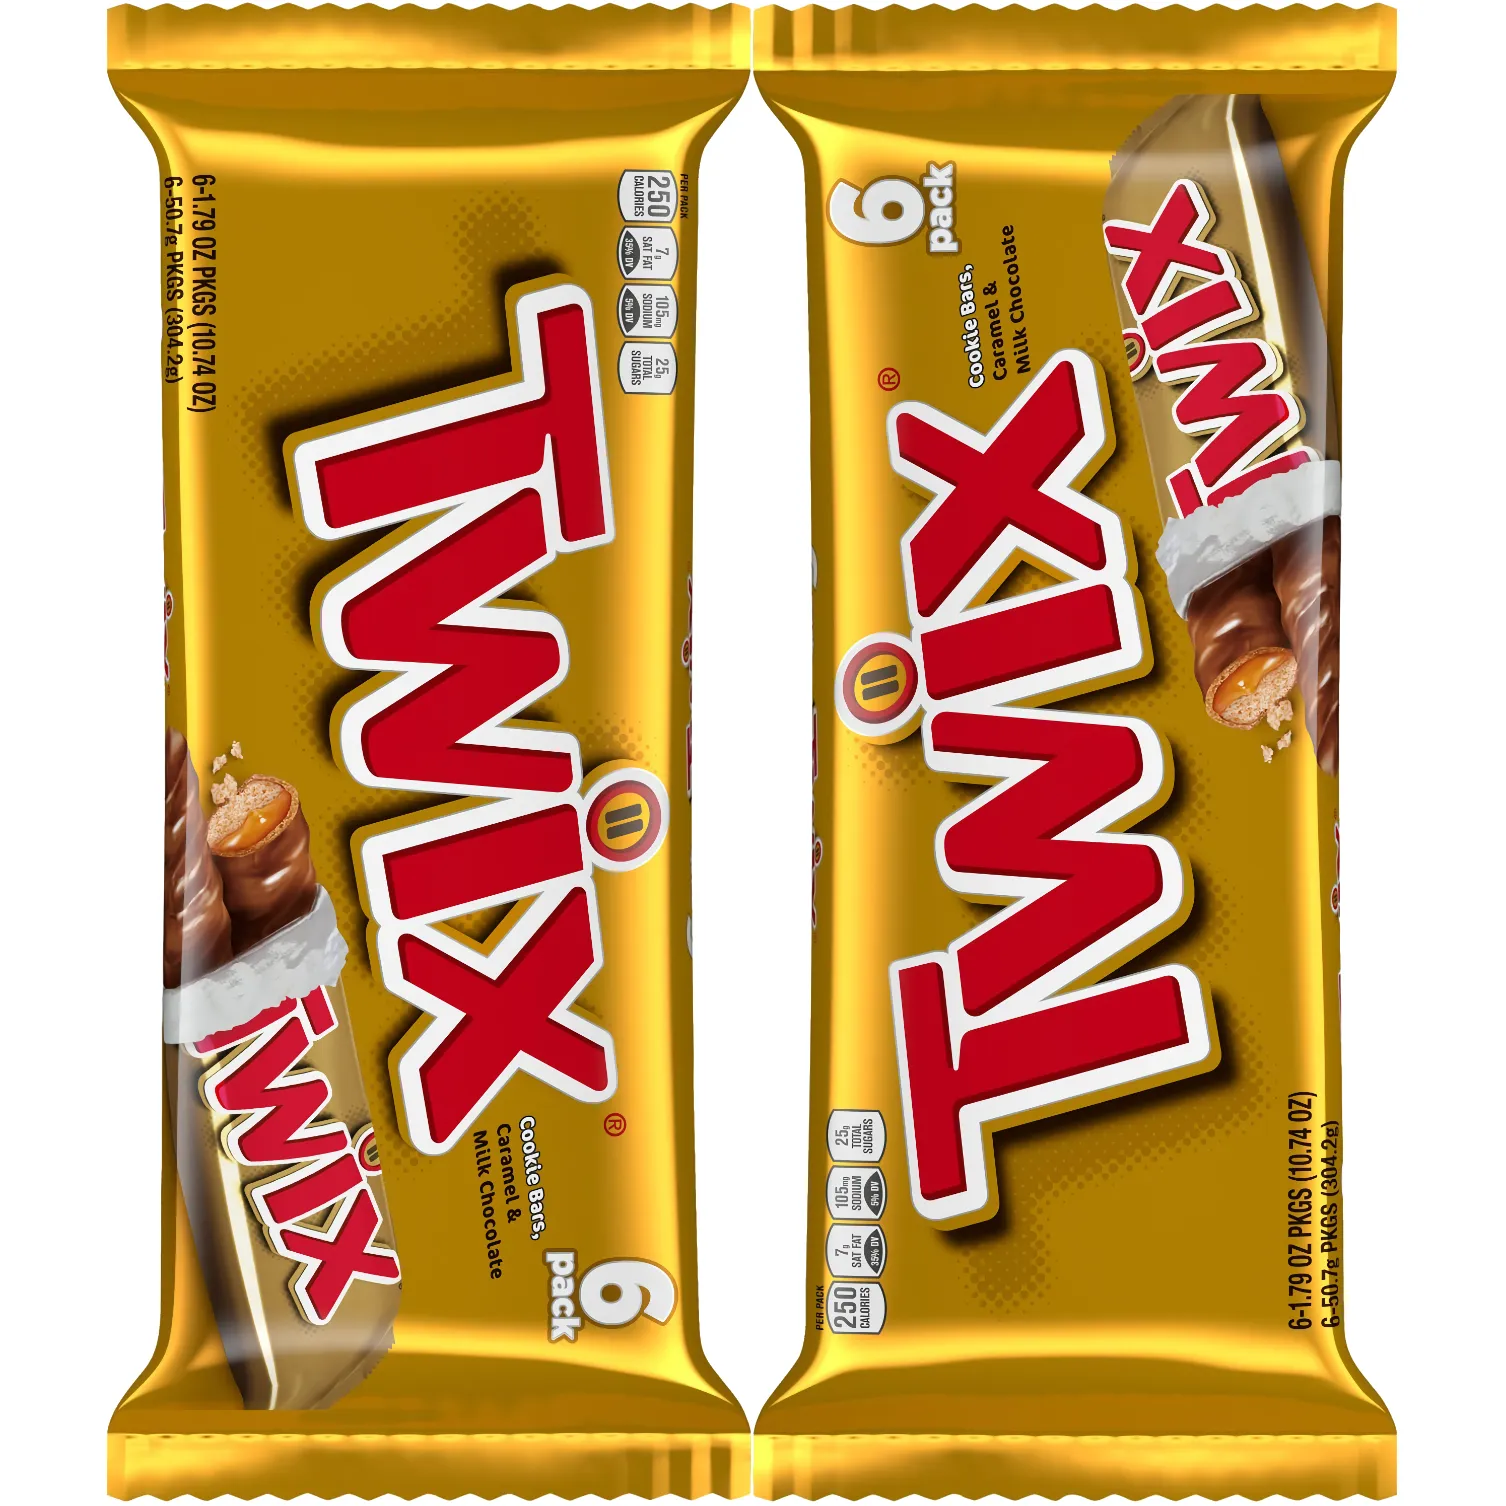 Free Twix Candy Bar Sample